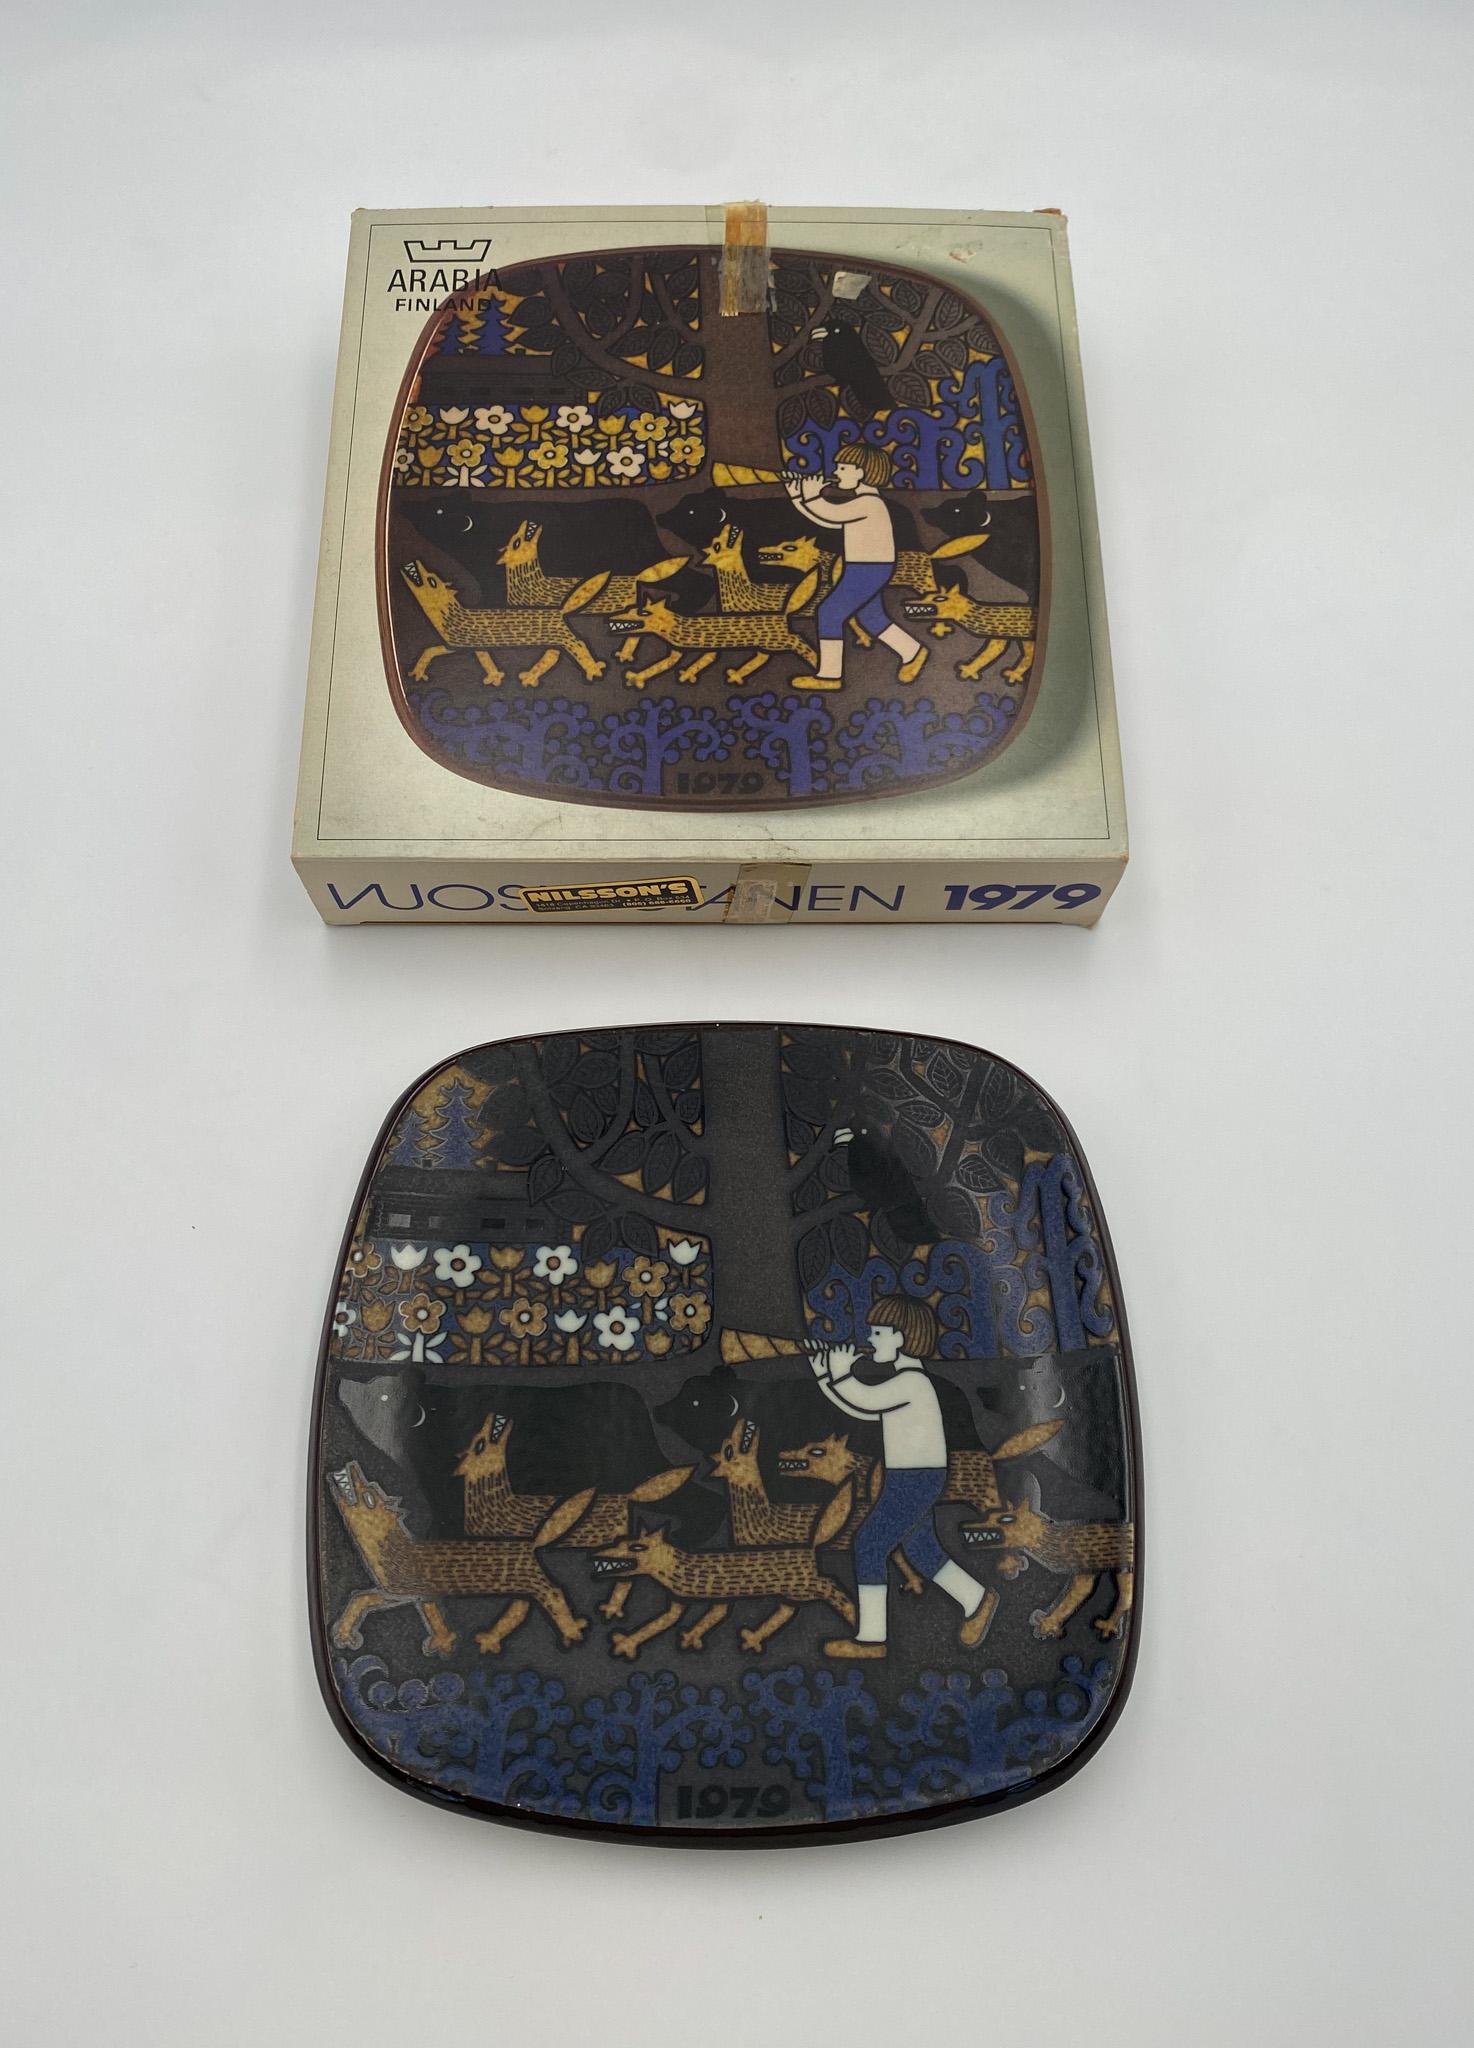 Raija Uosikkinen Decorative Plate for Arabia of Finland, 1976.  Retains the original box.  